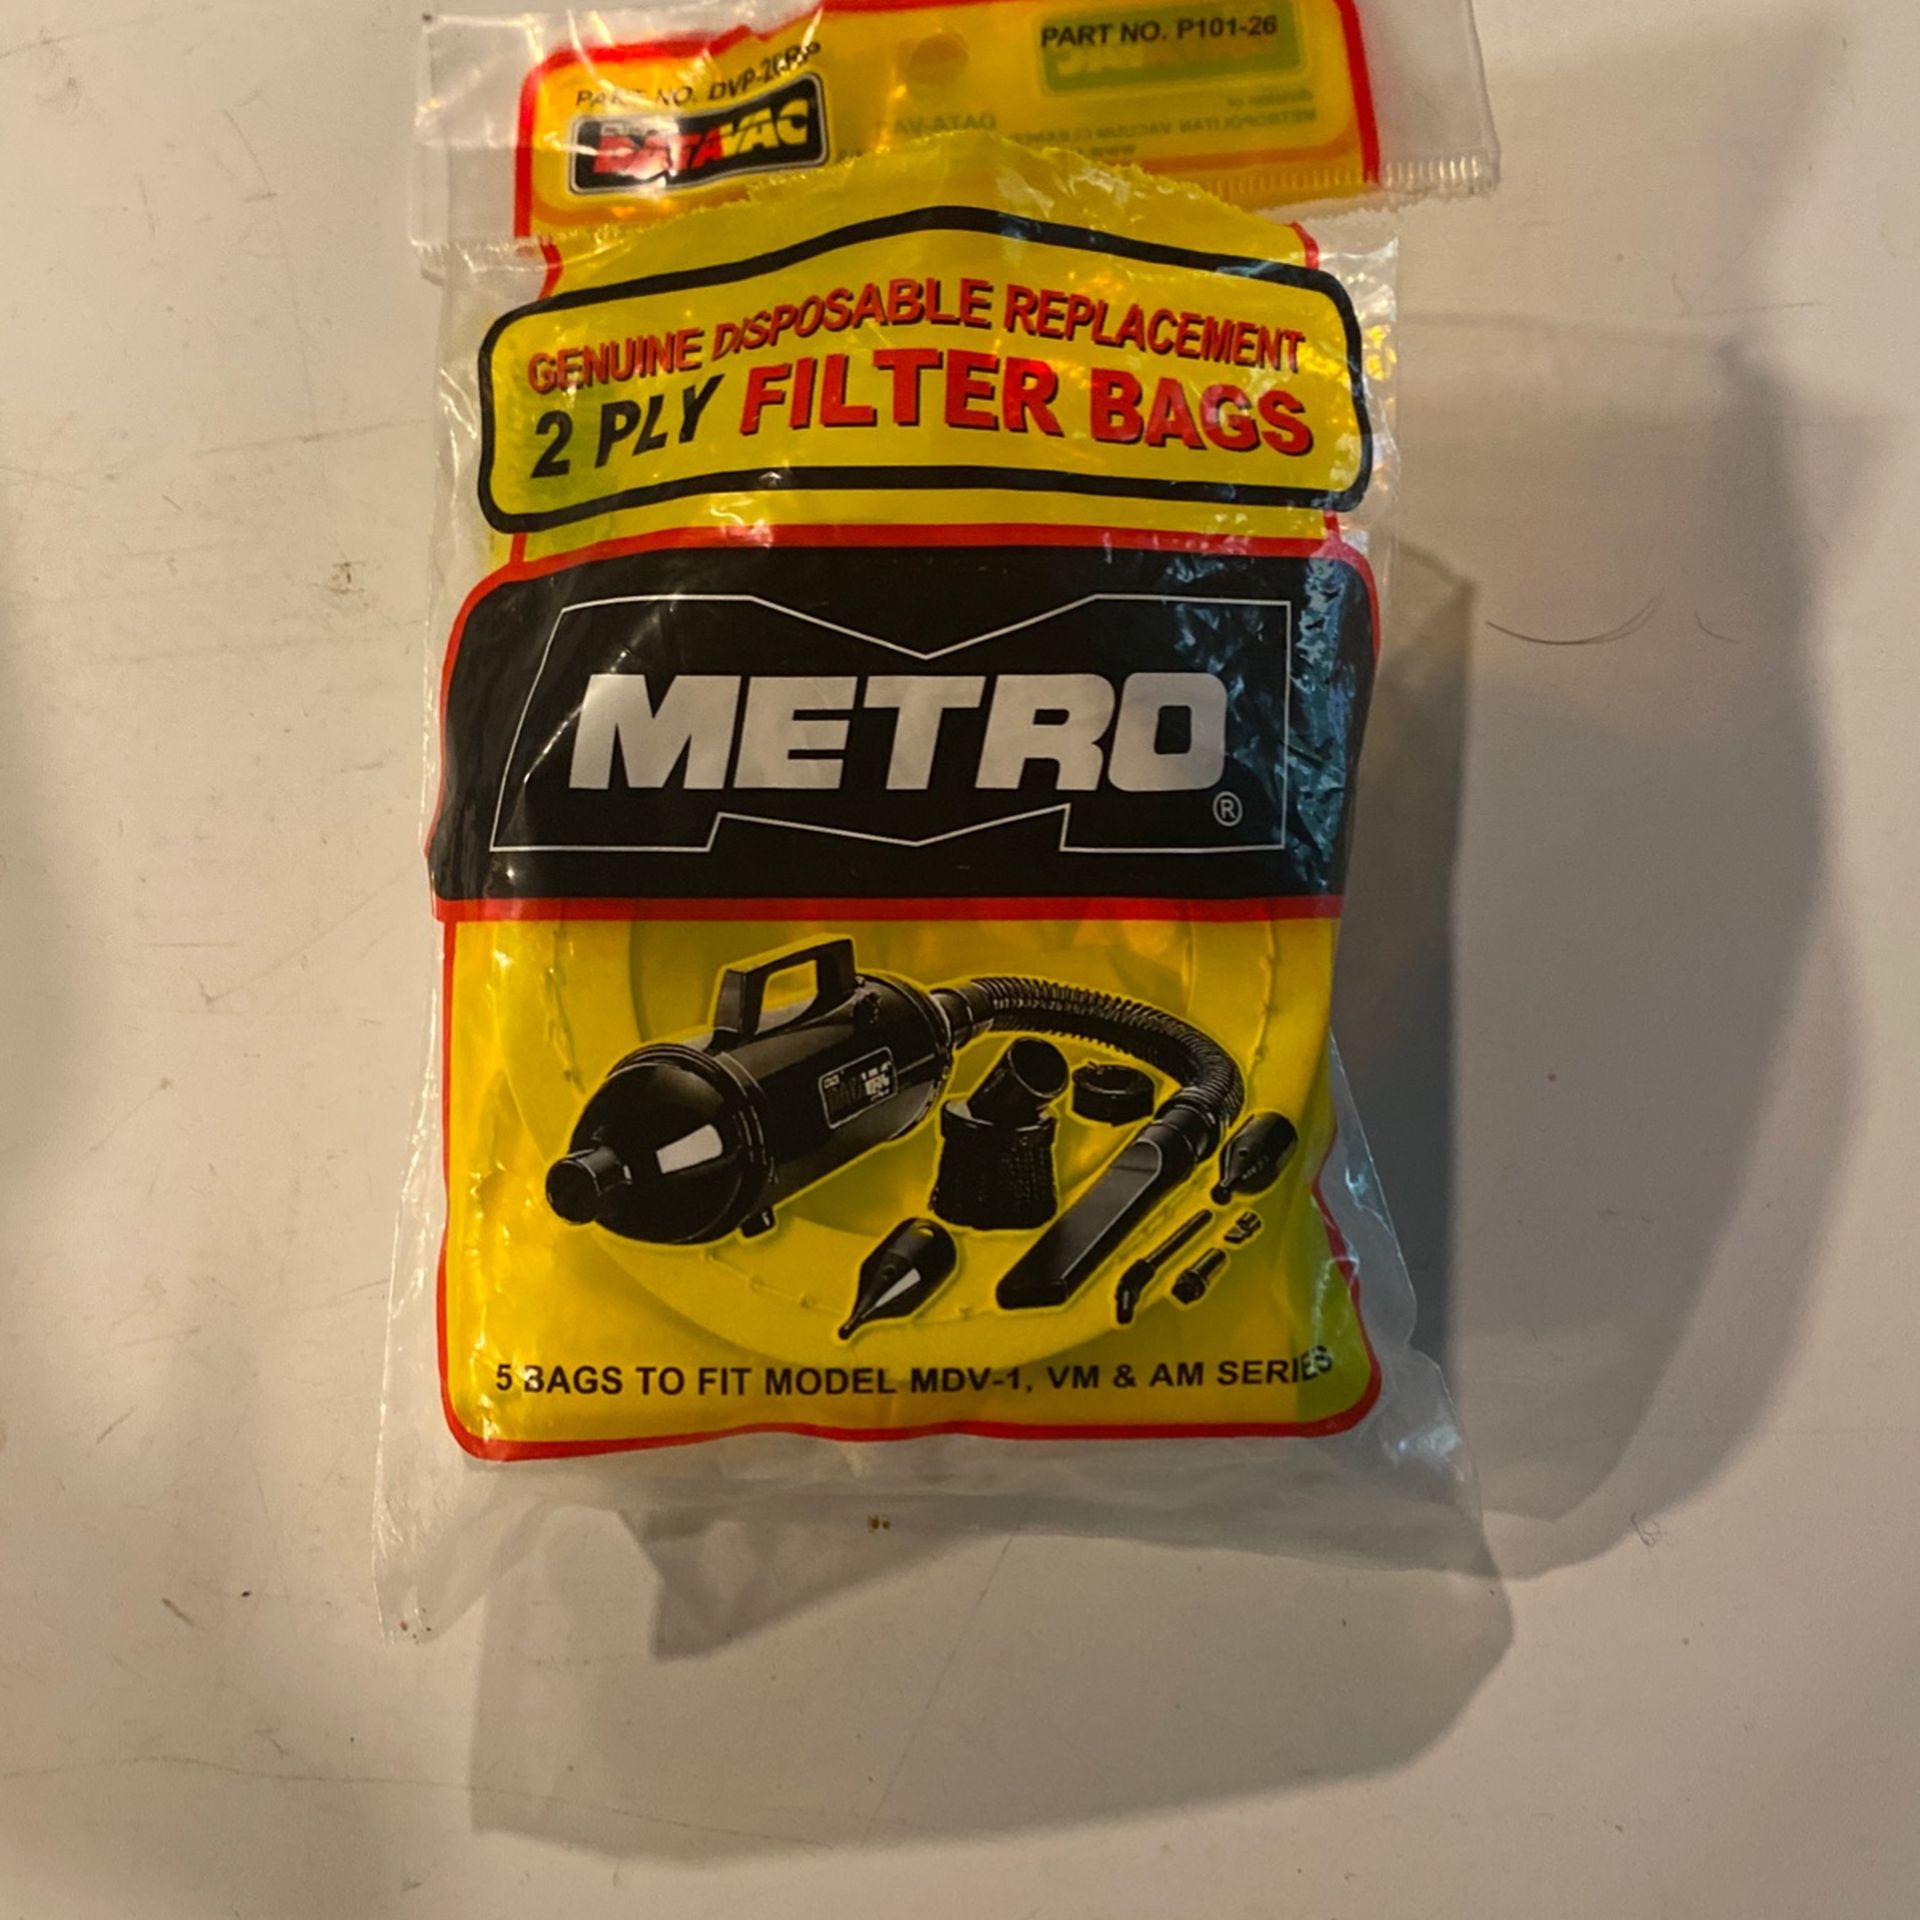 Metro vac Filters